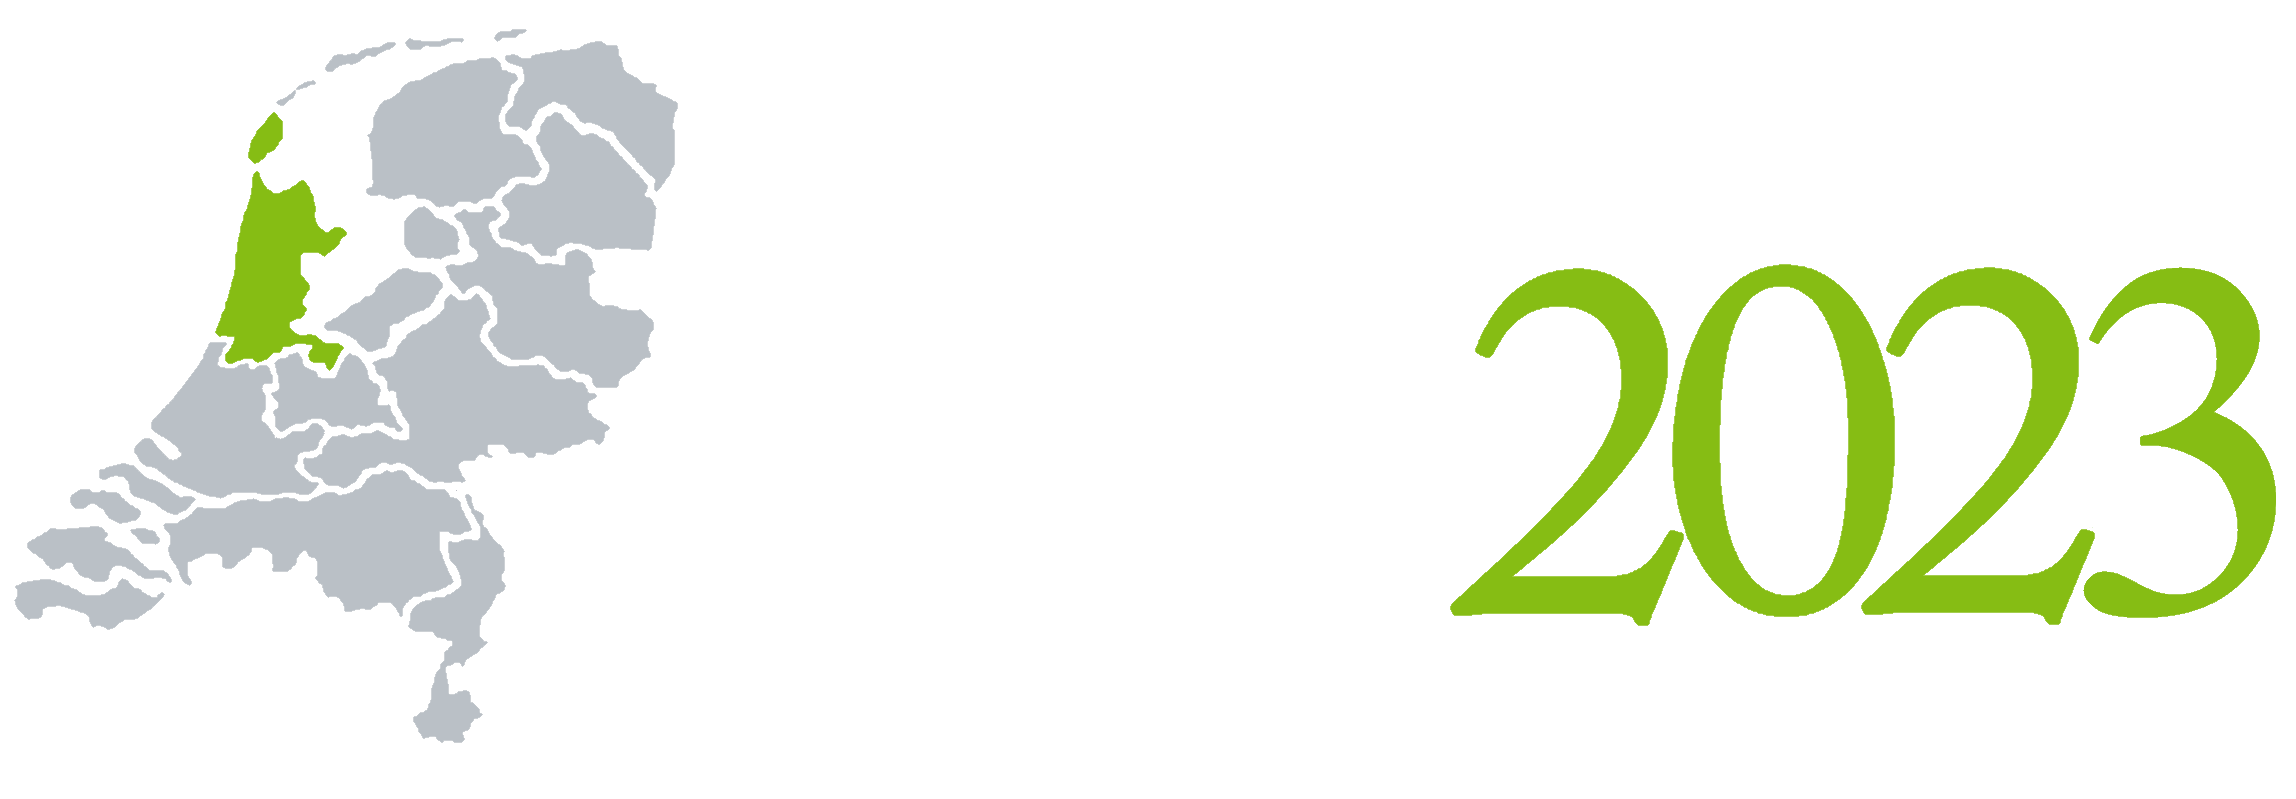 Landelijk Congres der Bestuurskunde (LCB) 2022